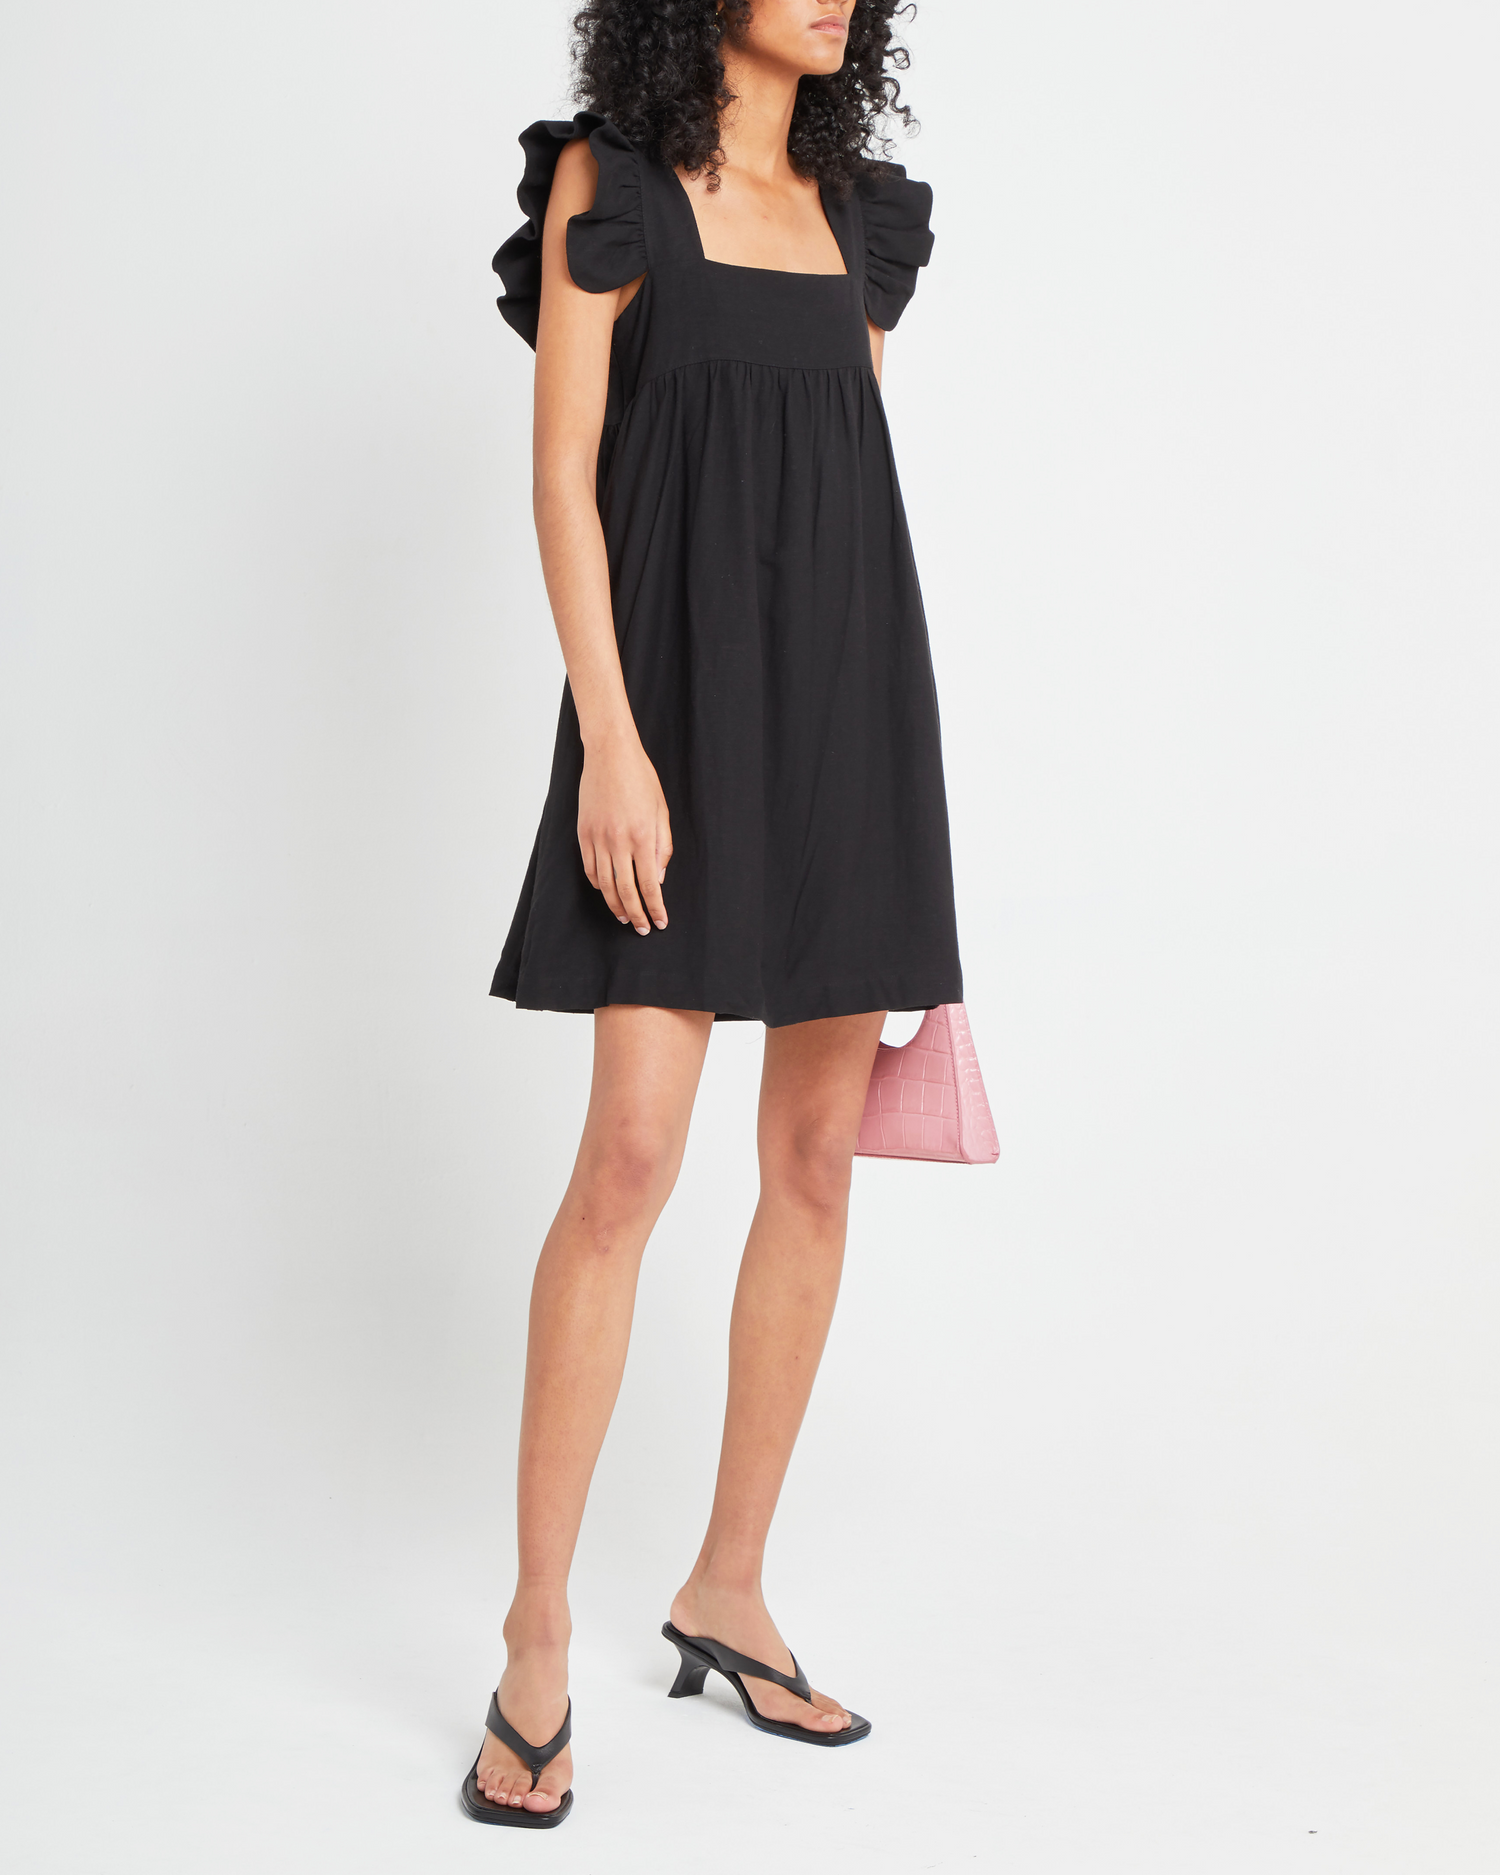 Fifth image of Aria Dress, a black mini dress, ruffle sleeves, retro, babydoll, square neckline